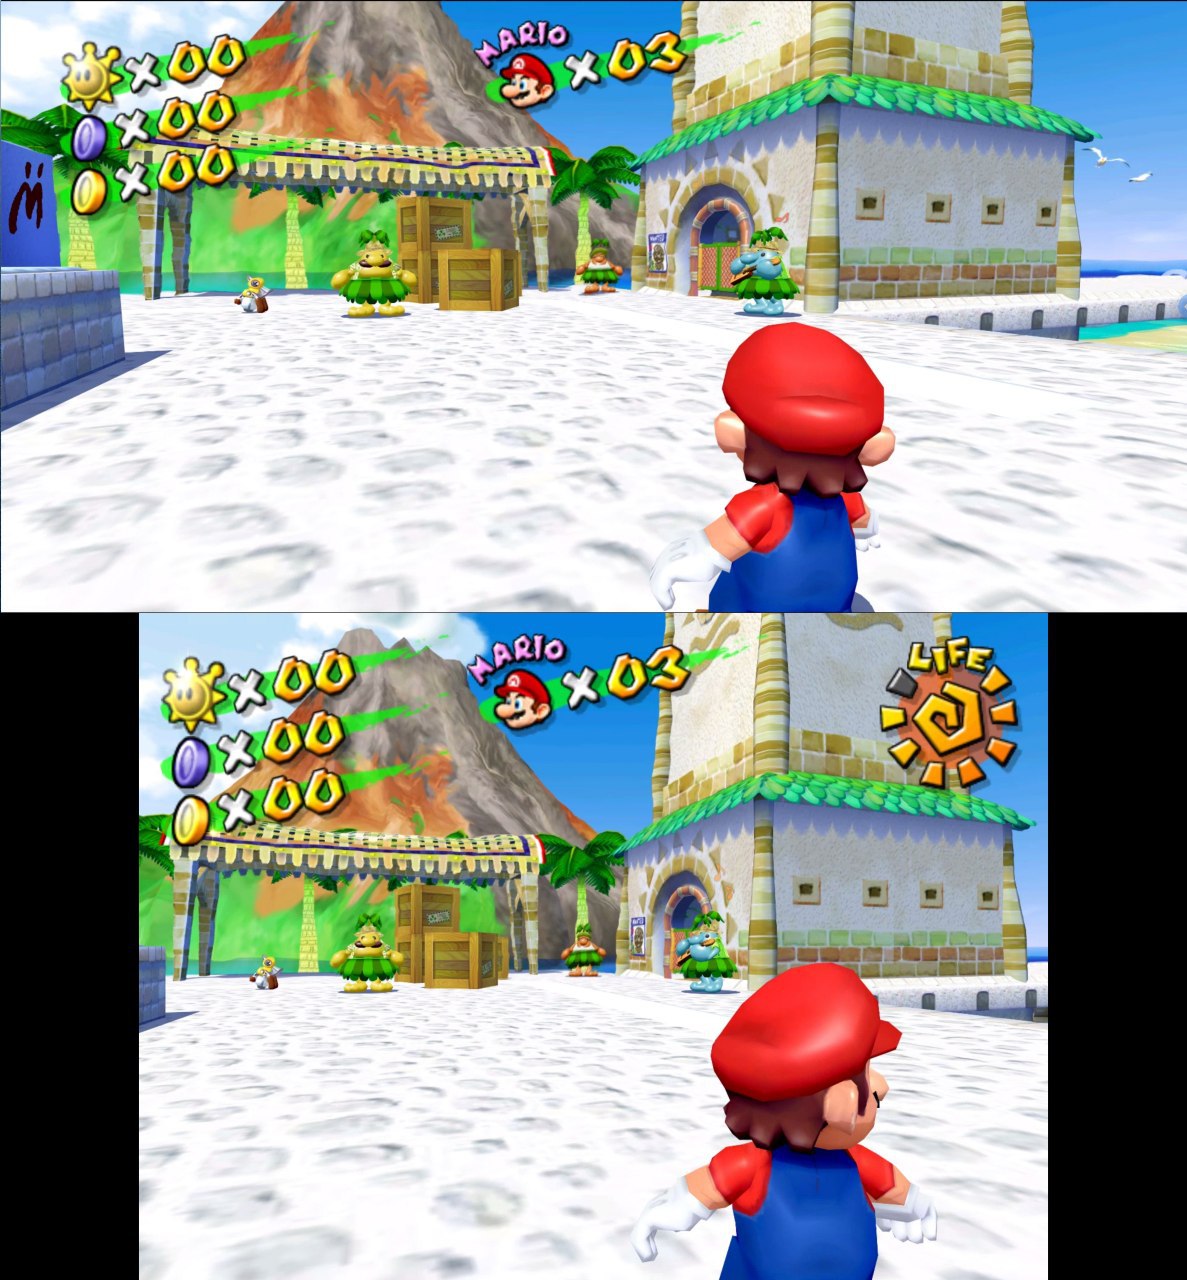 Descubierto de N64, Wii y en Super Mario All Stars! en Nintendo Switch › Scene